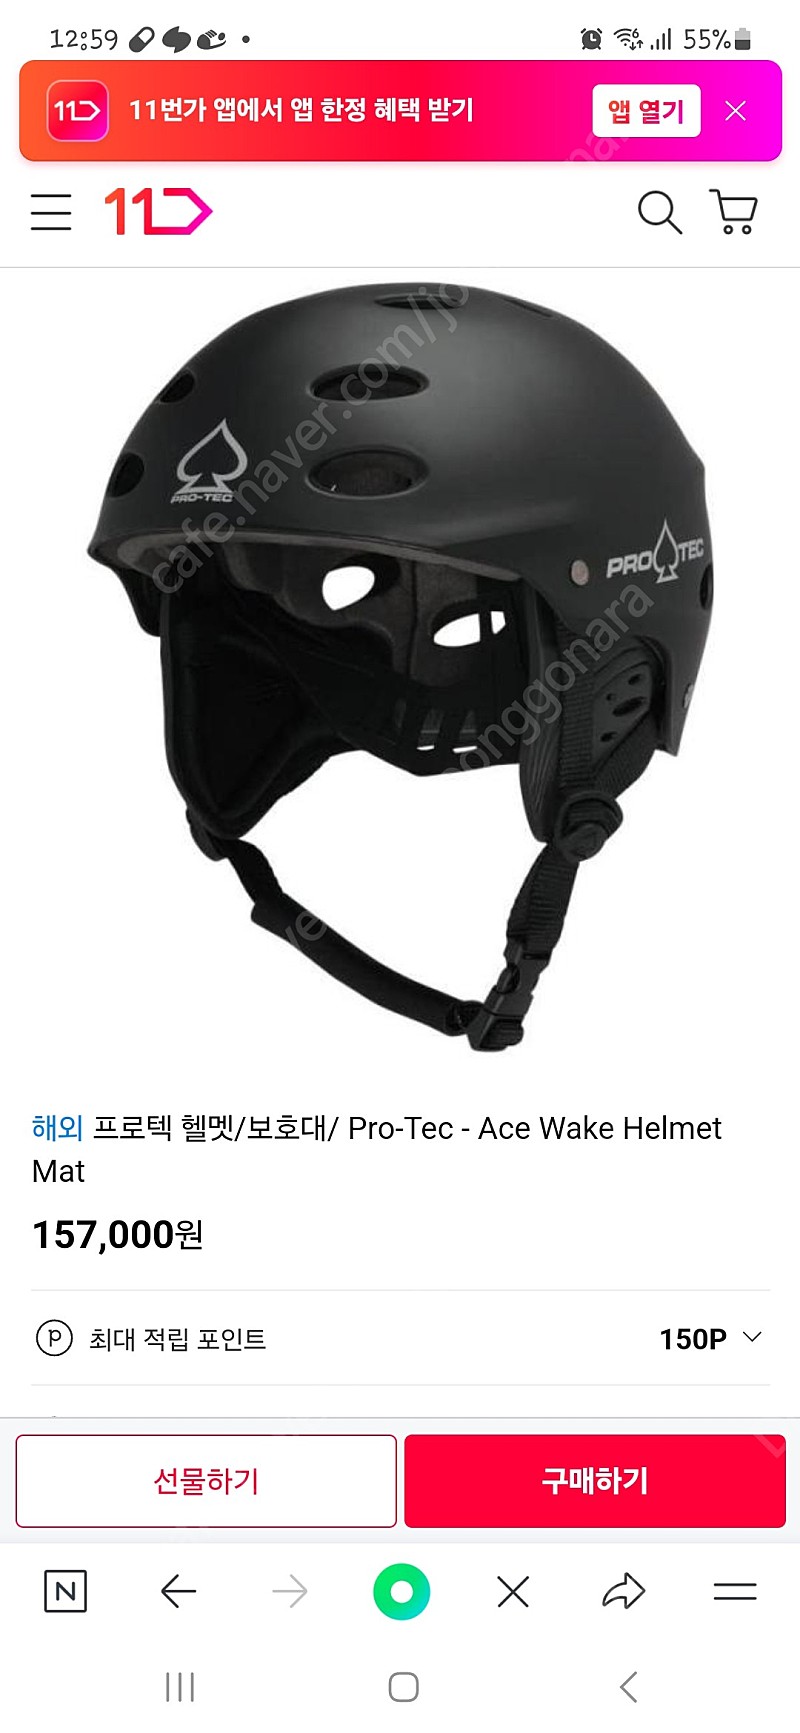 Protec 프로텍 헬멧 스노우보드 스키 웨이크보드 수상스키 레저 (고프로 장착가능)